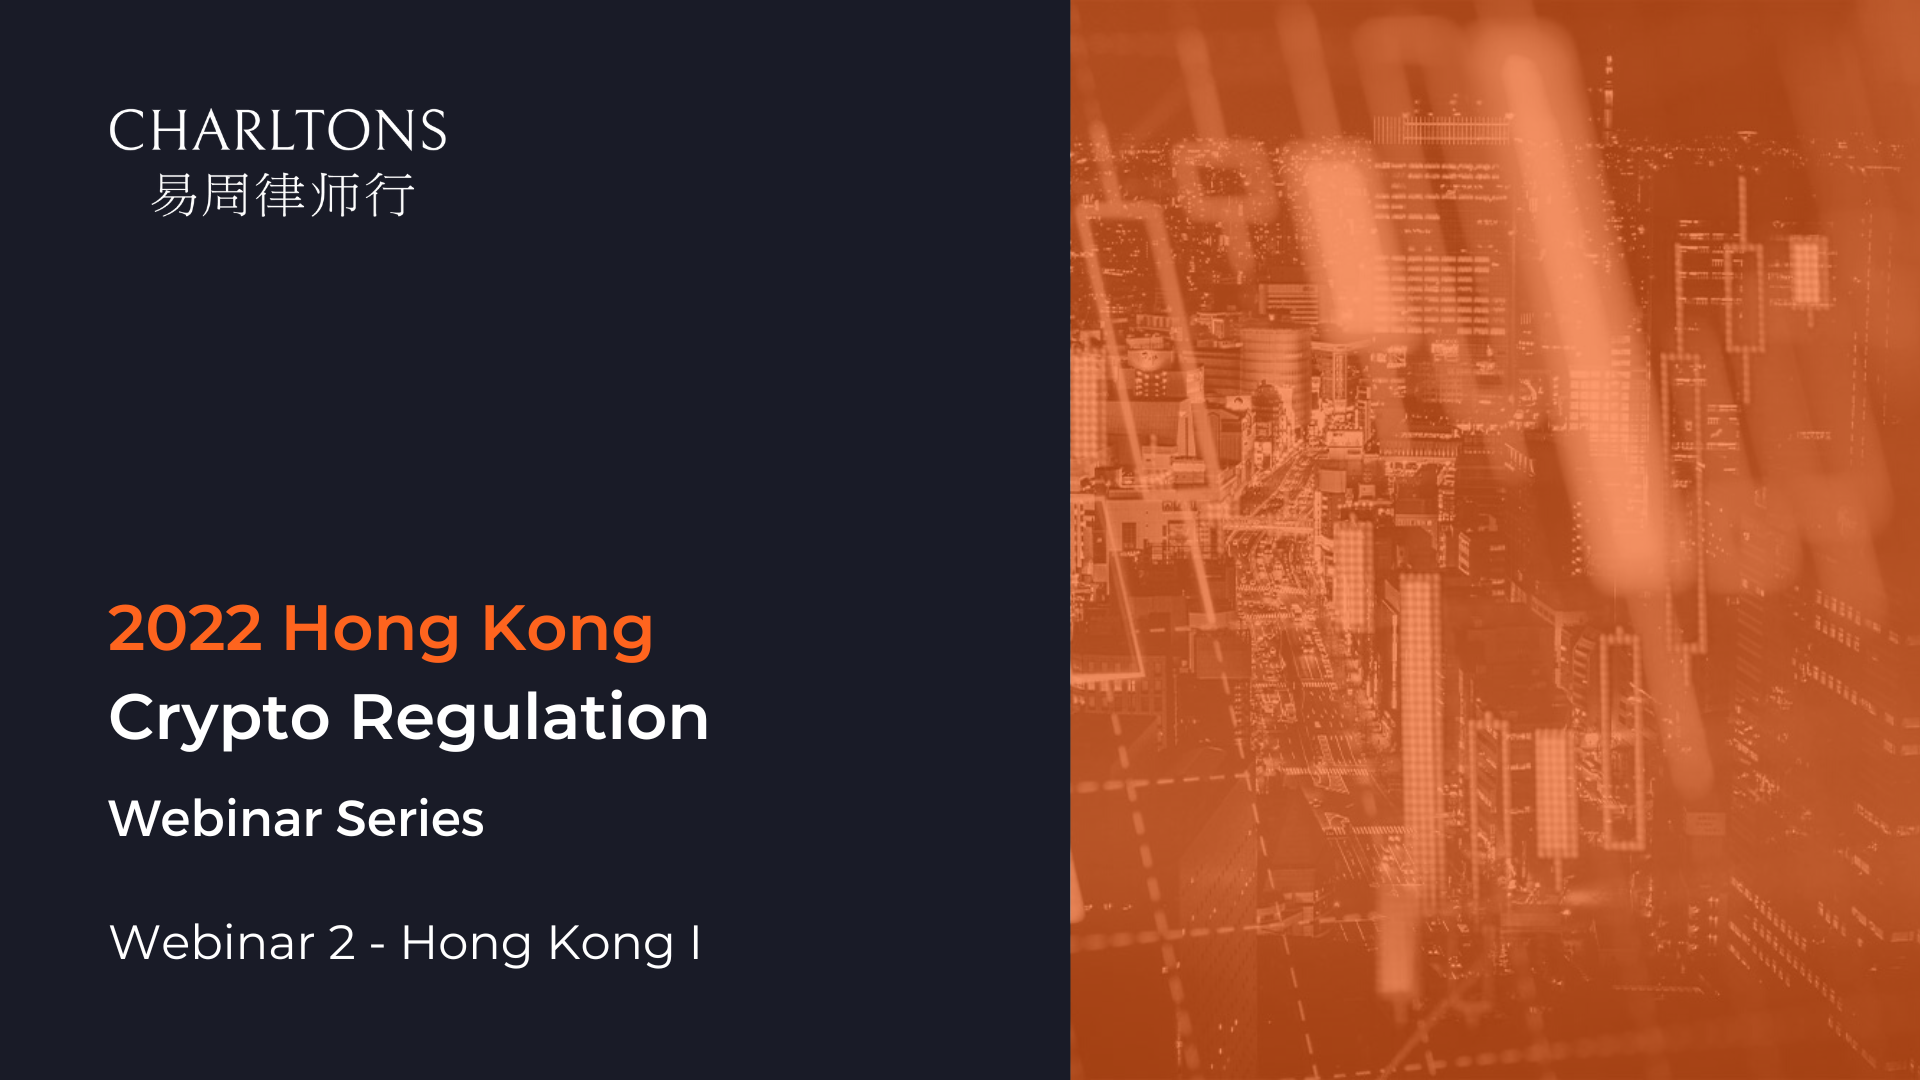 Webinar 2 of Hong Kong Crypto Regulation Webinar Series 2022